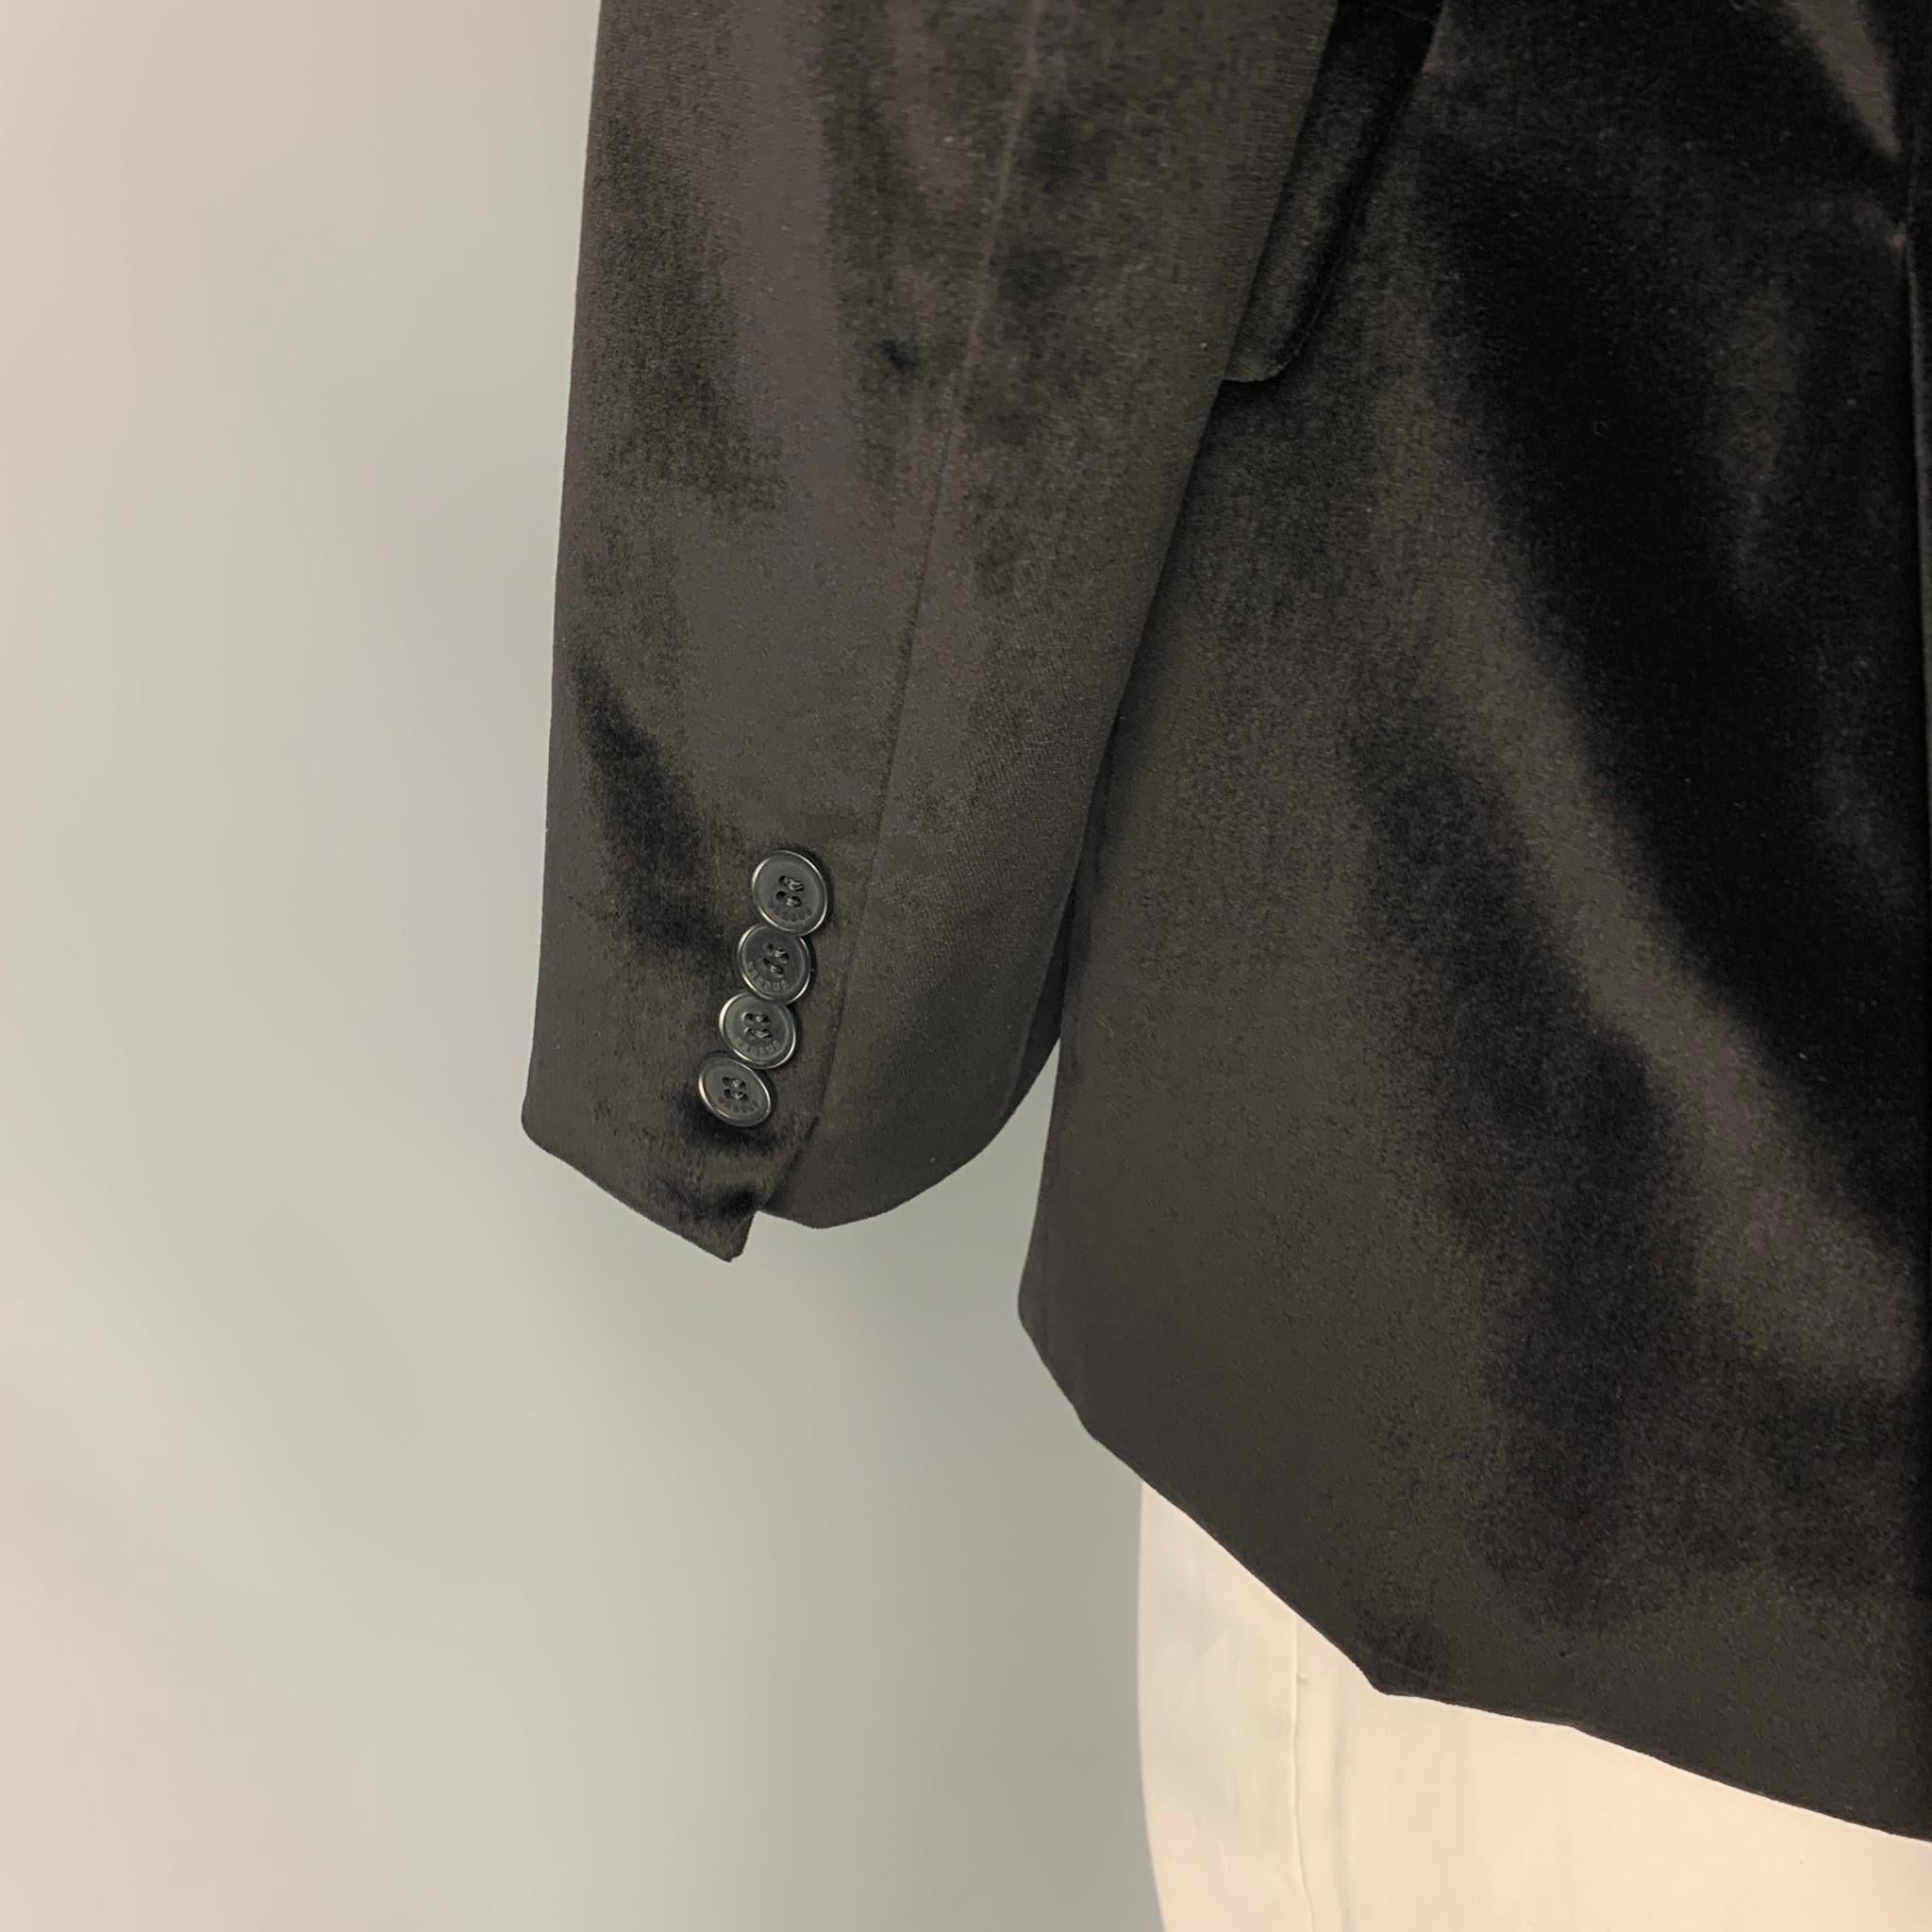 VERSUS by GIANNI VERSACE Size 40 Black Cotton Blend Velvet Sport Coat 1